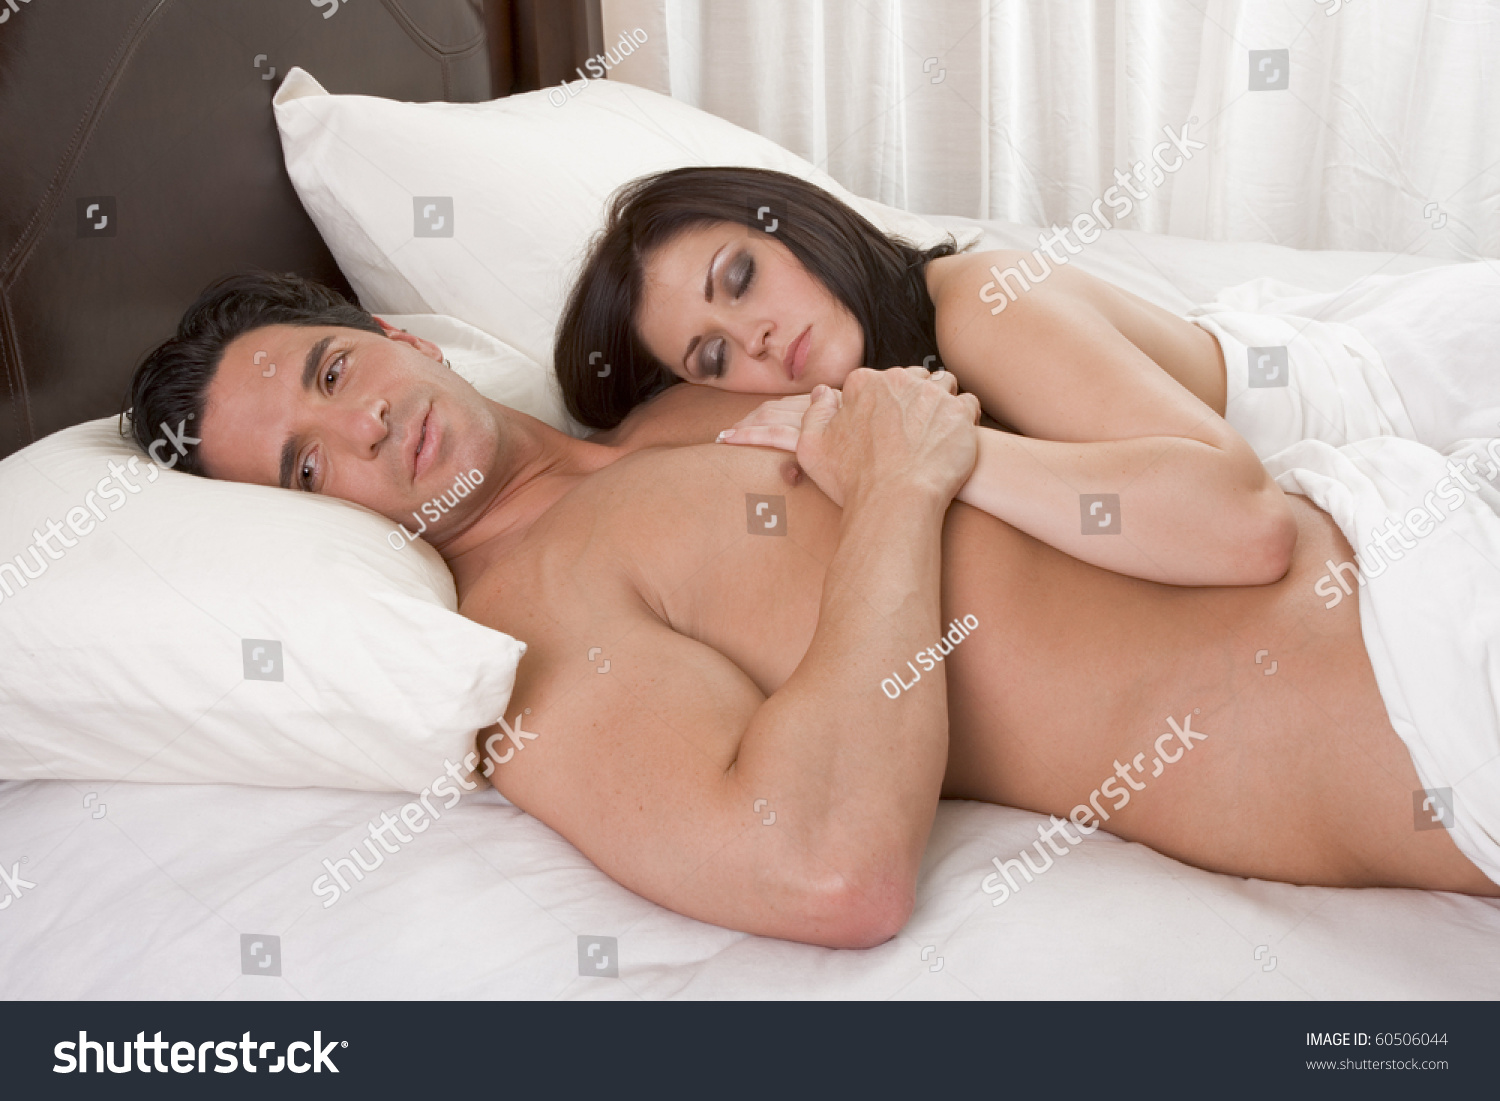 Sleeping Nudes Having Sex 72